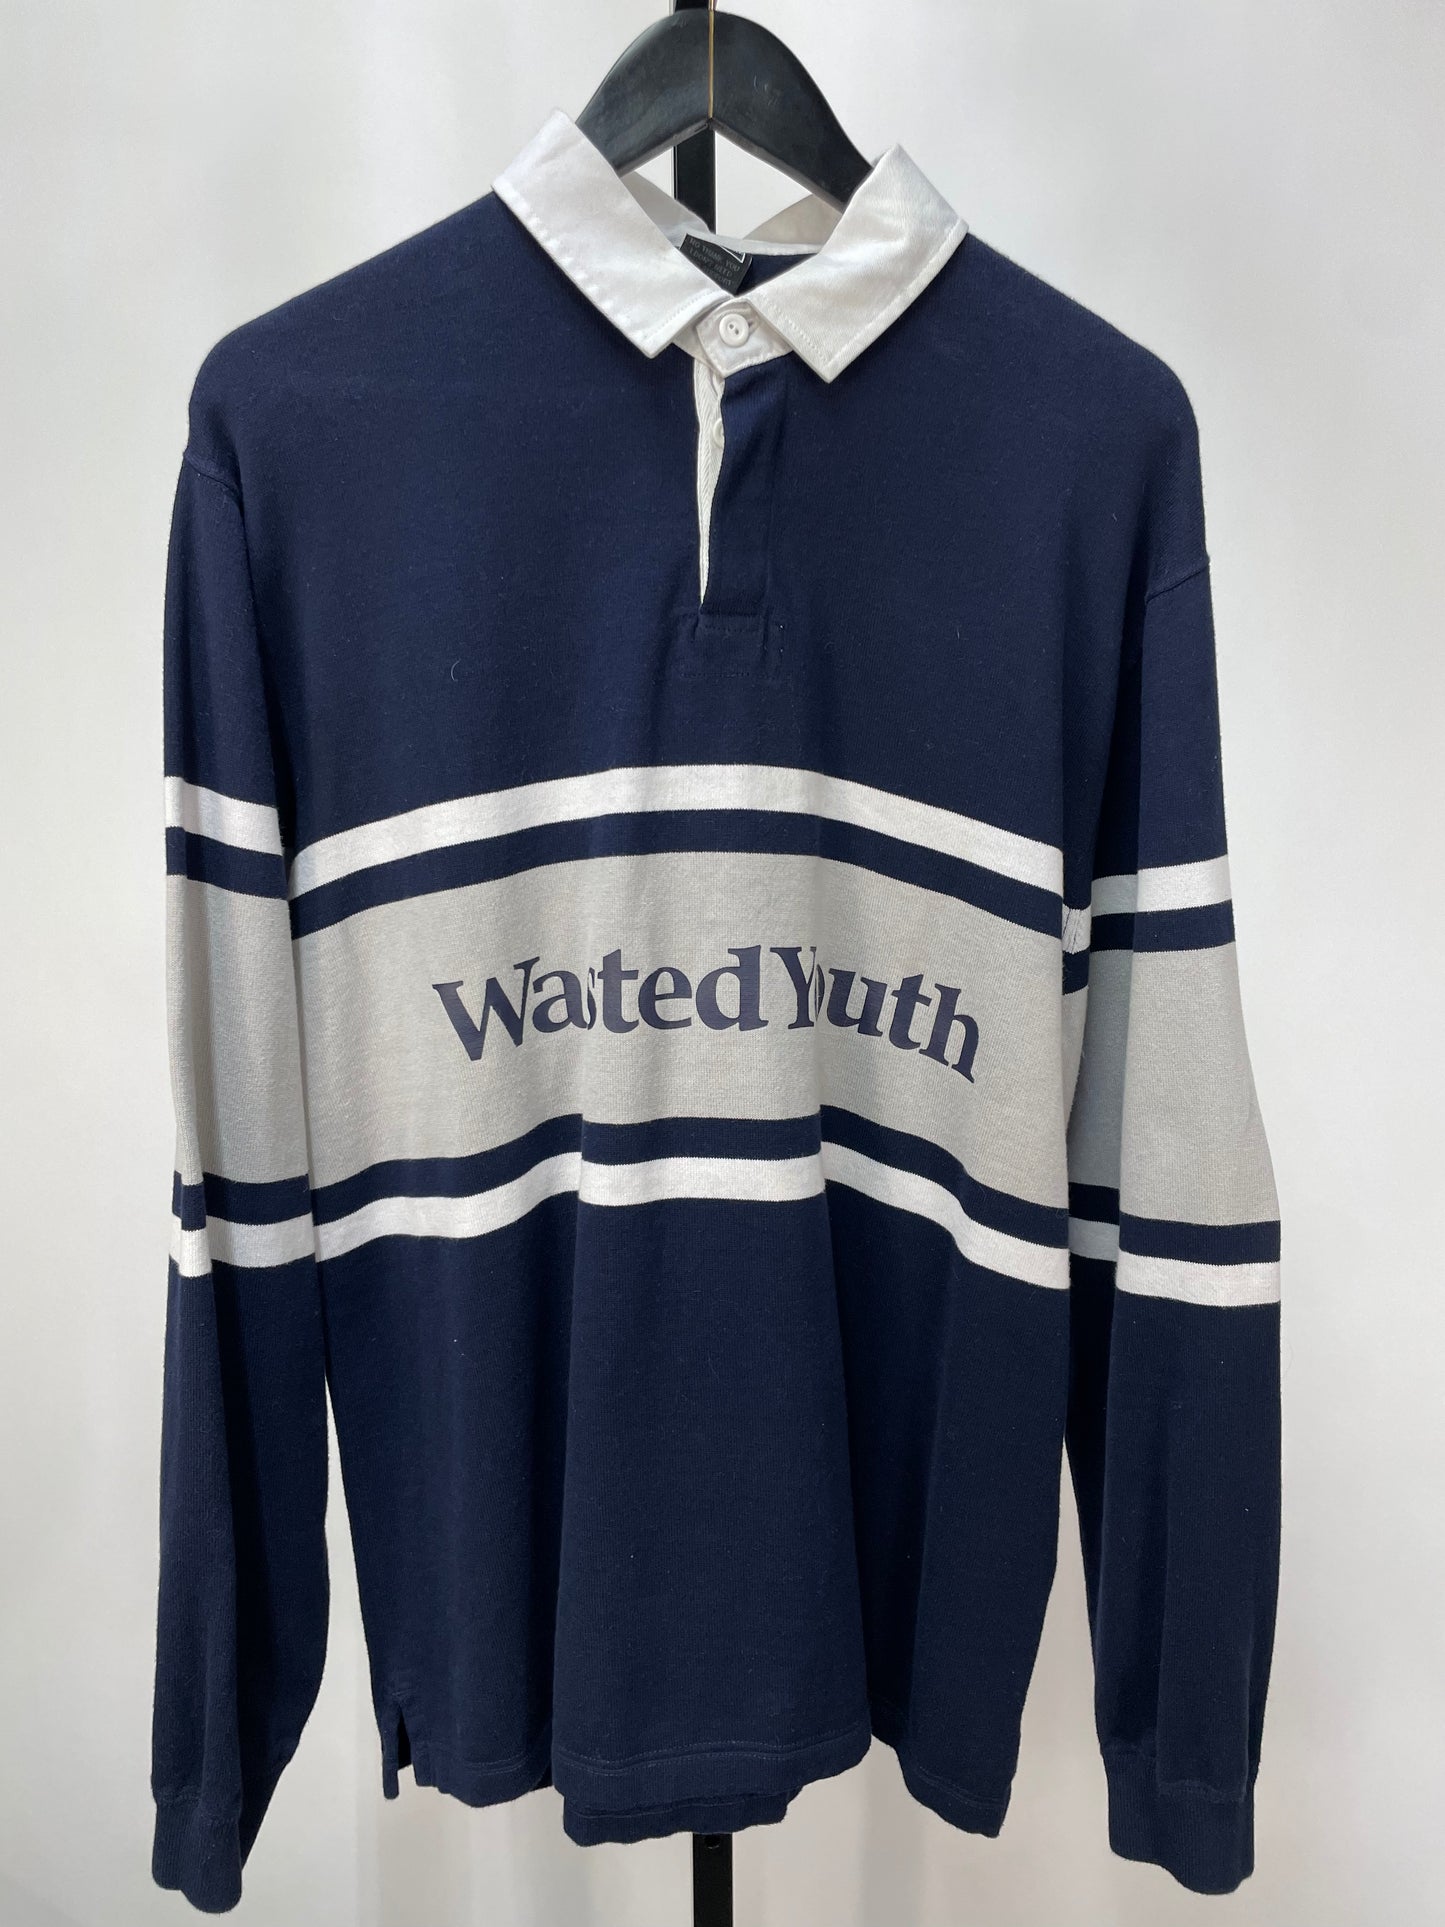 wasted youth ラガーシャツ XL 品質は非常に良い 51.0%OFF ...